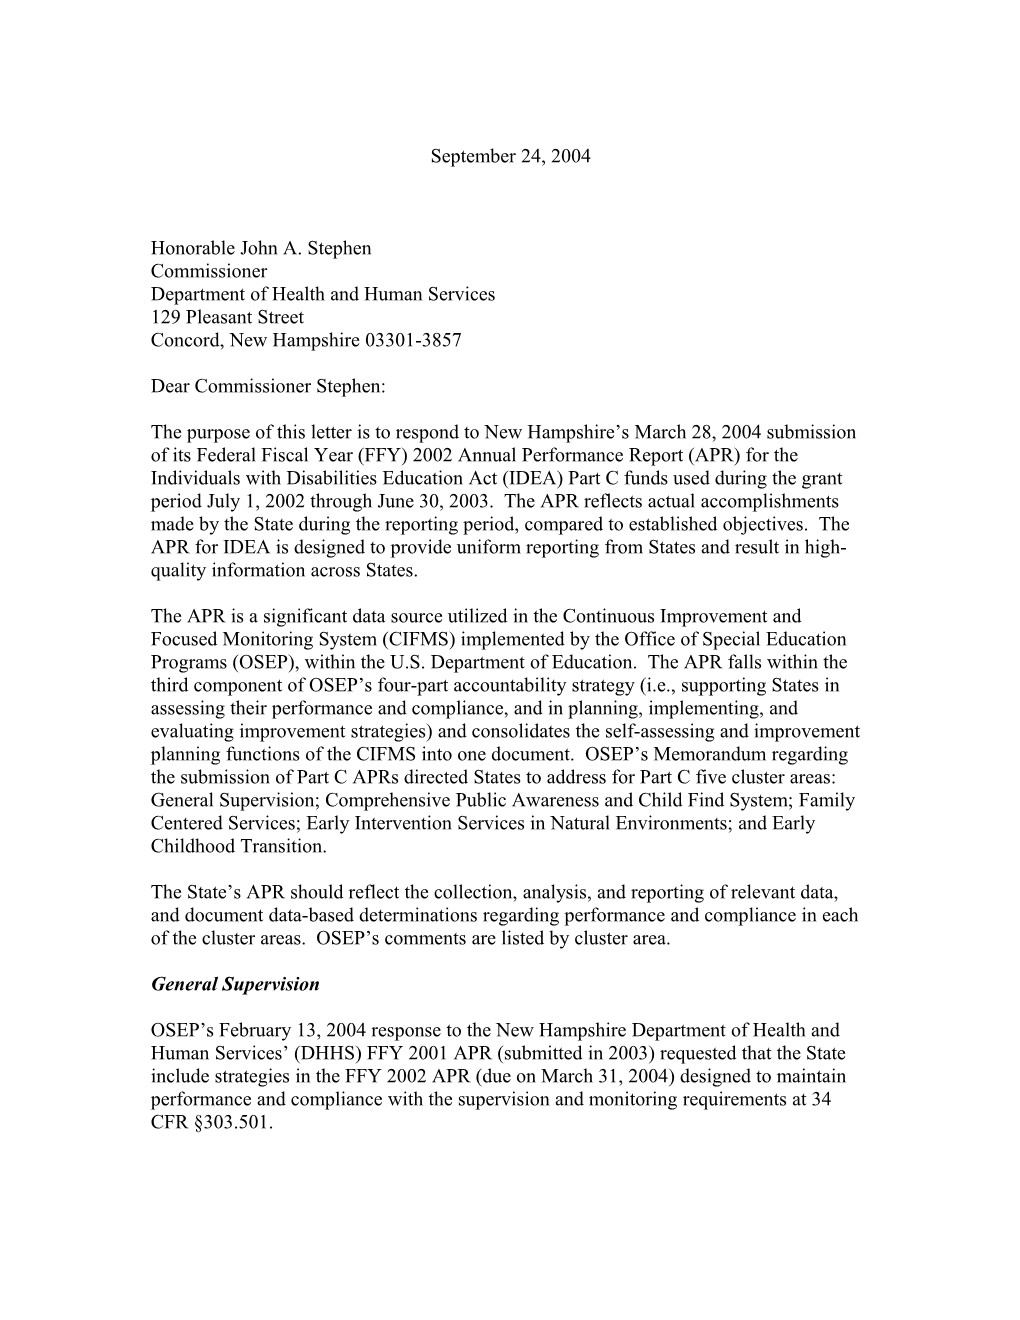 New Hampshire Part C APR Letter, 2002-2003 (MS Word)